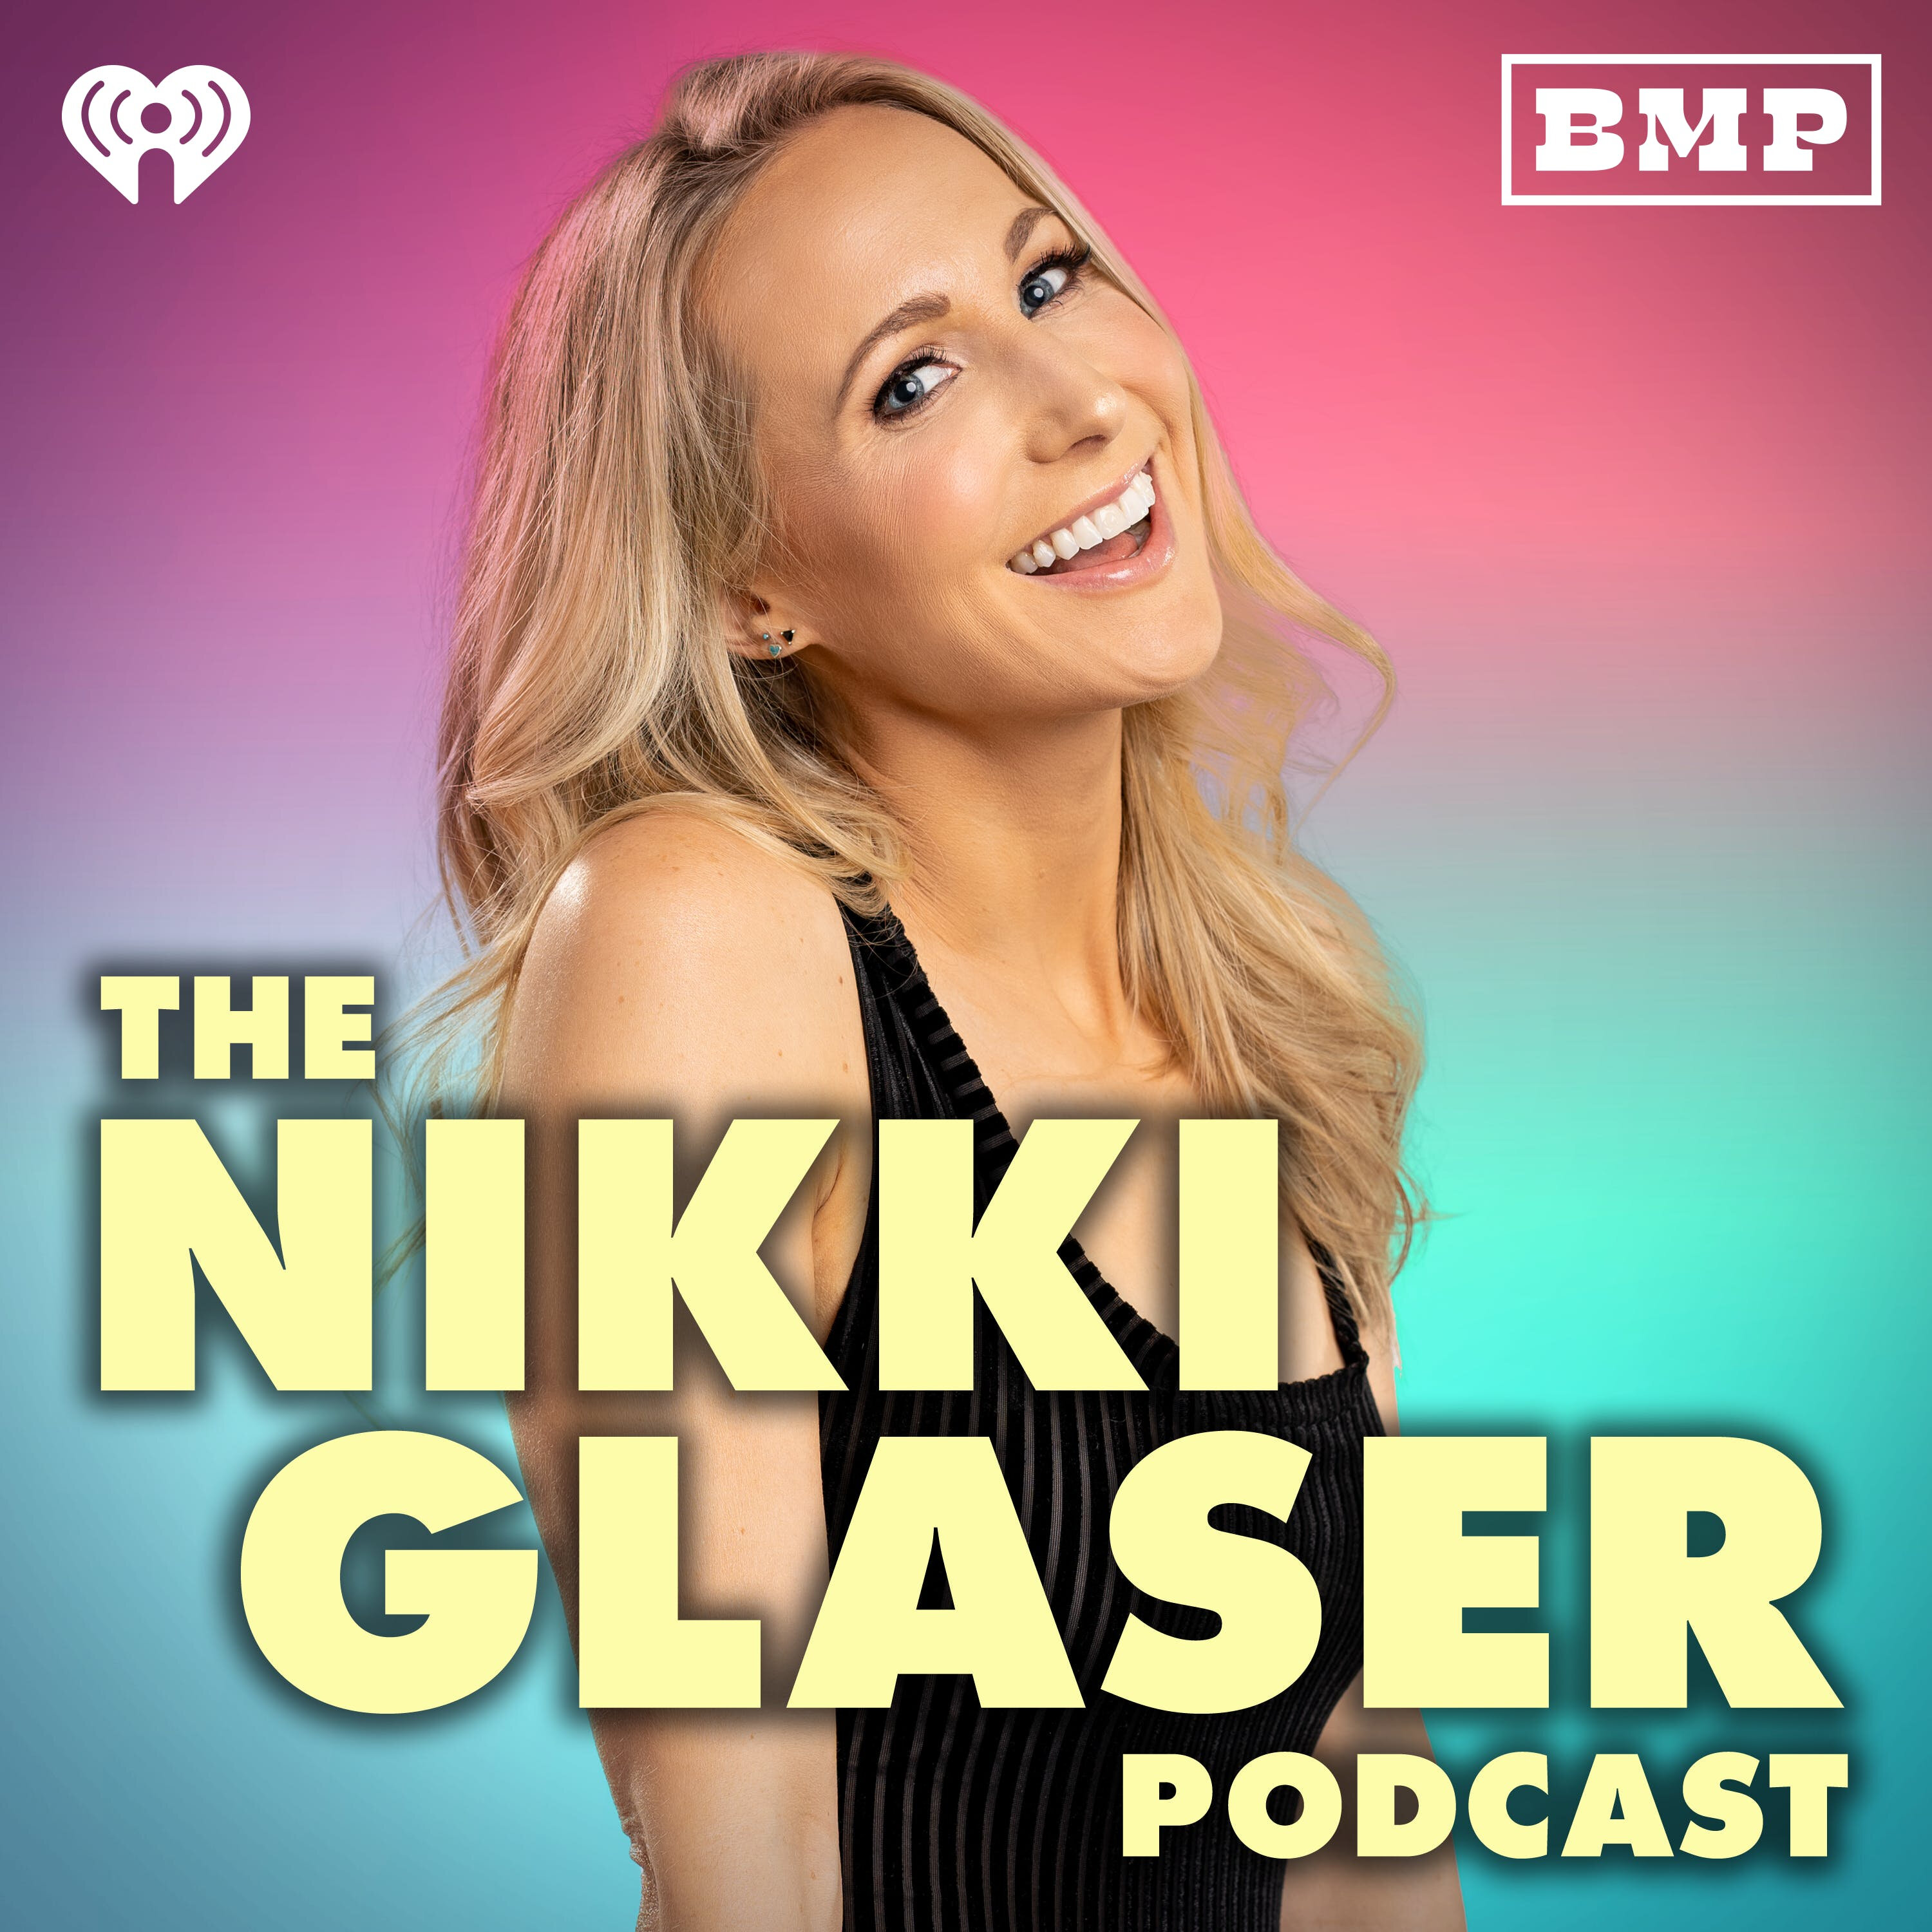 The Nikki Glaser Podcast podcast show image